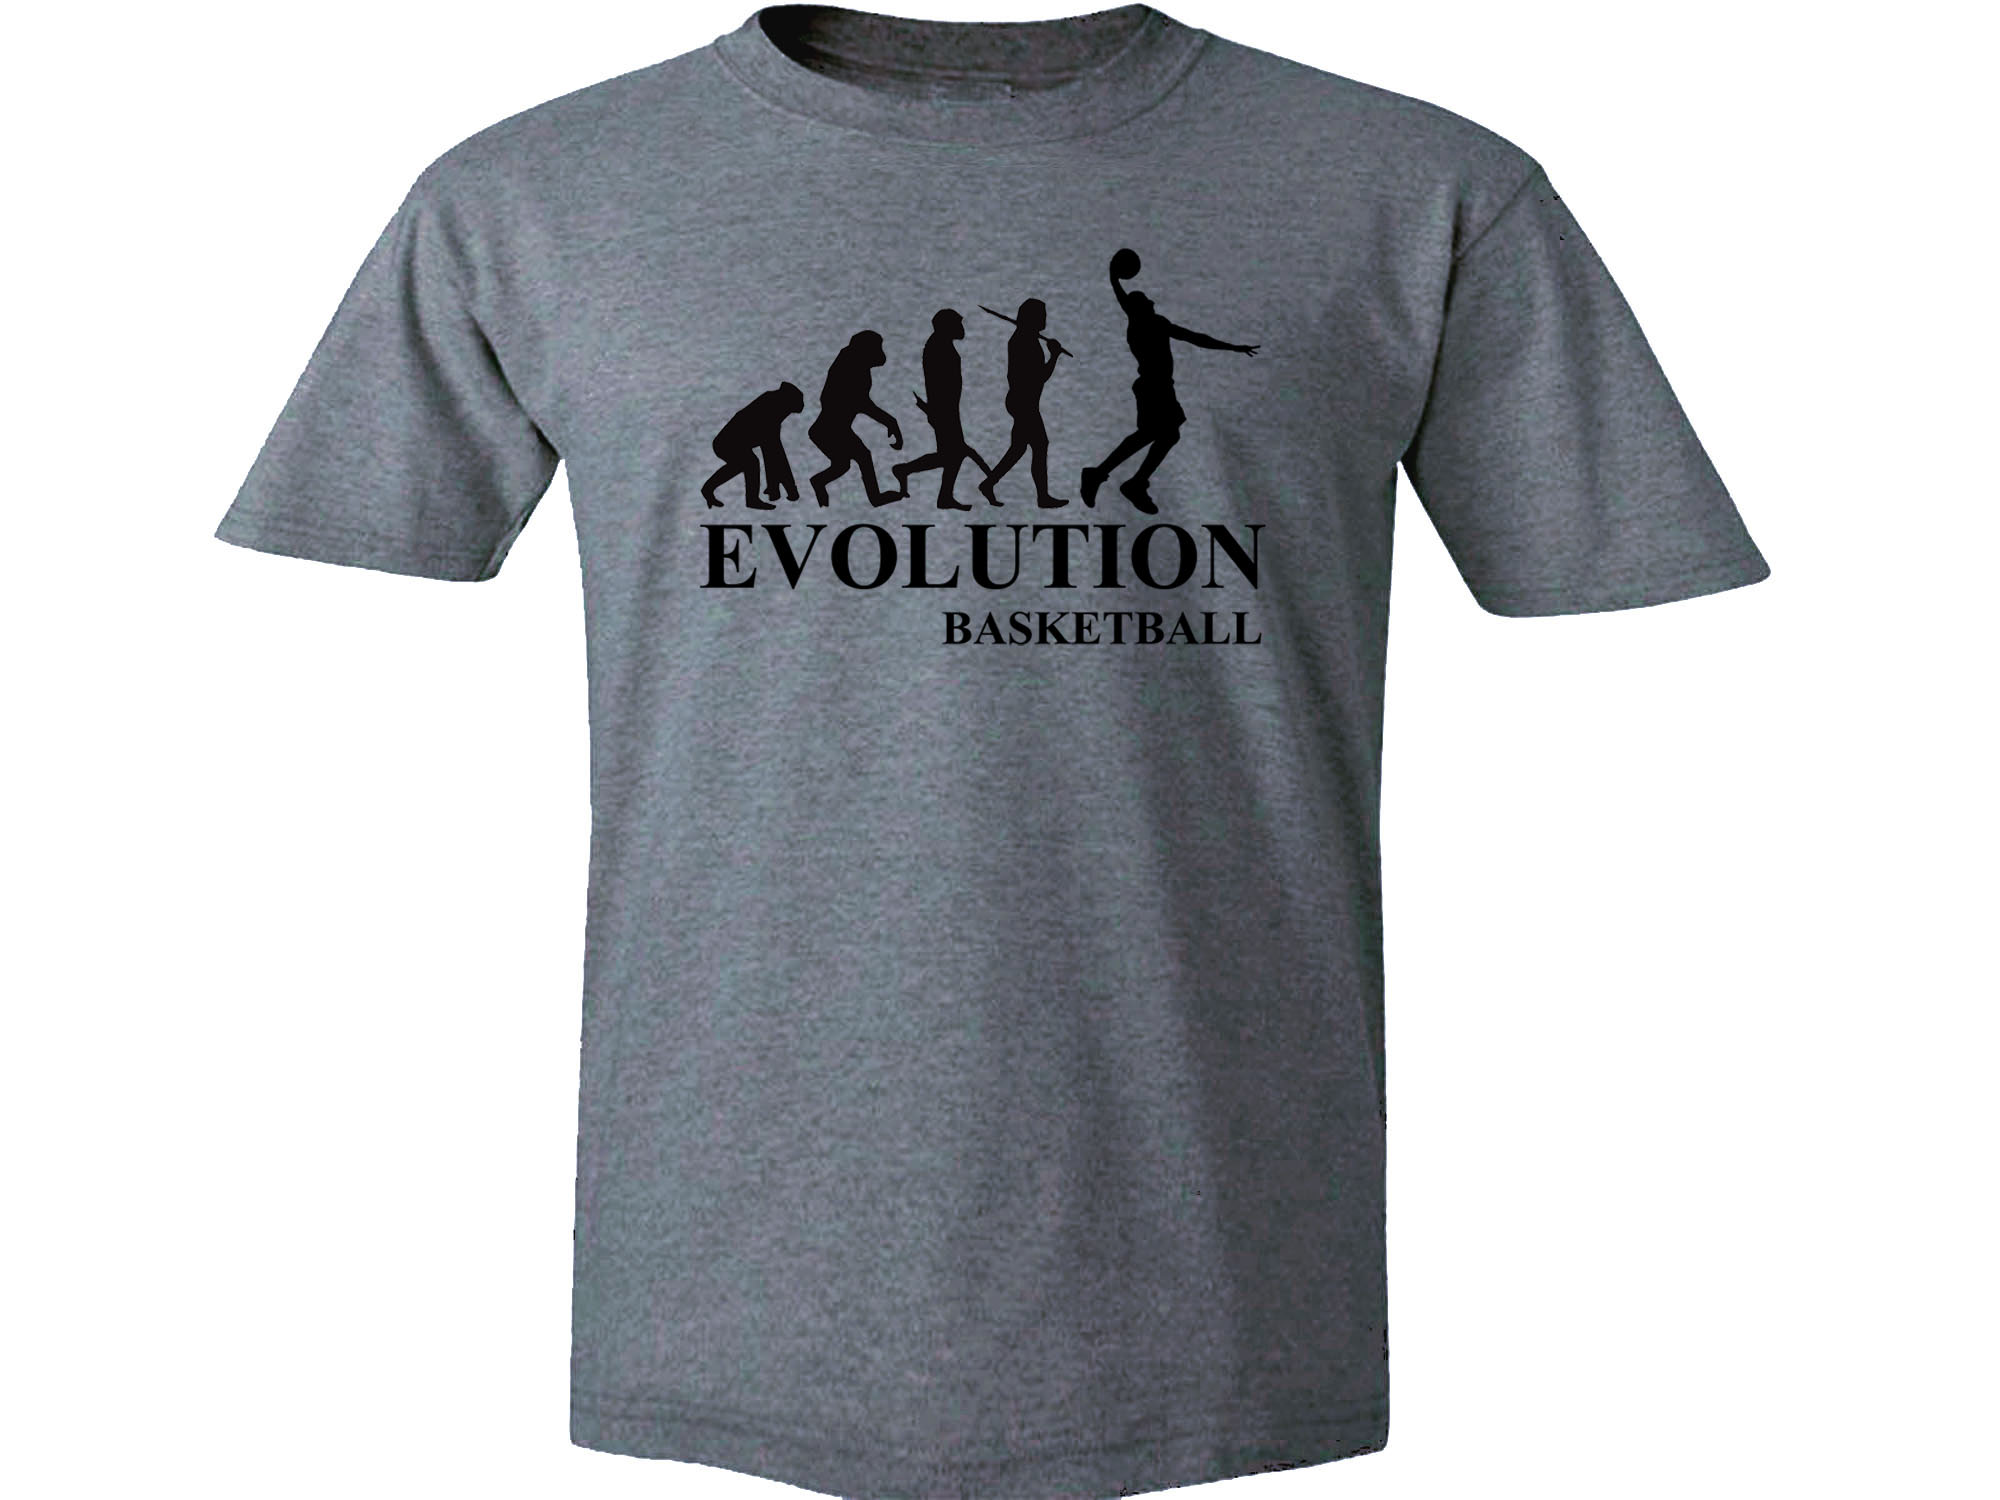 Basketball evolution funny evolve gray t-shirt